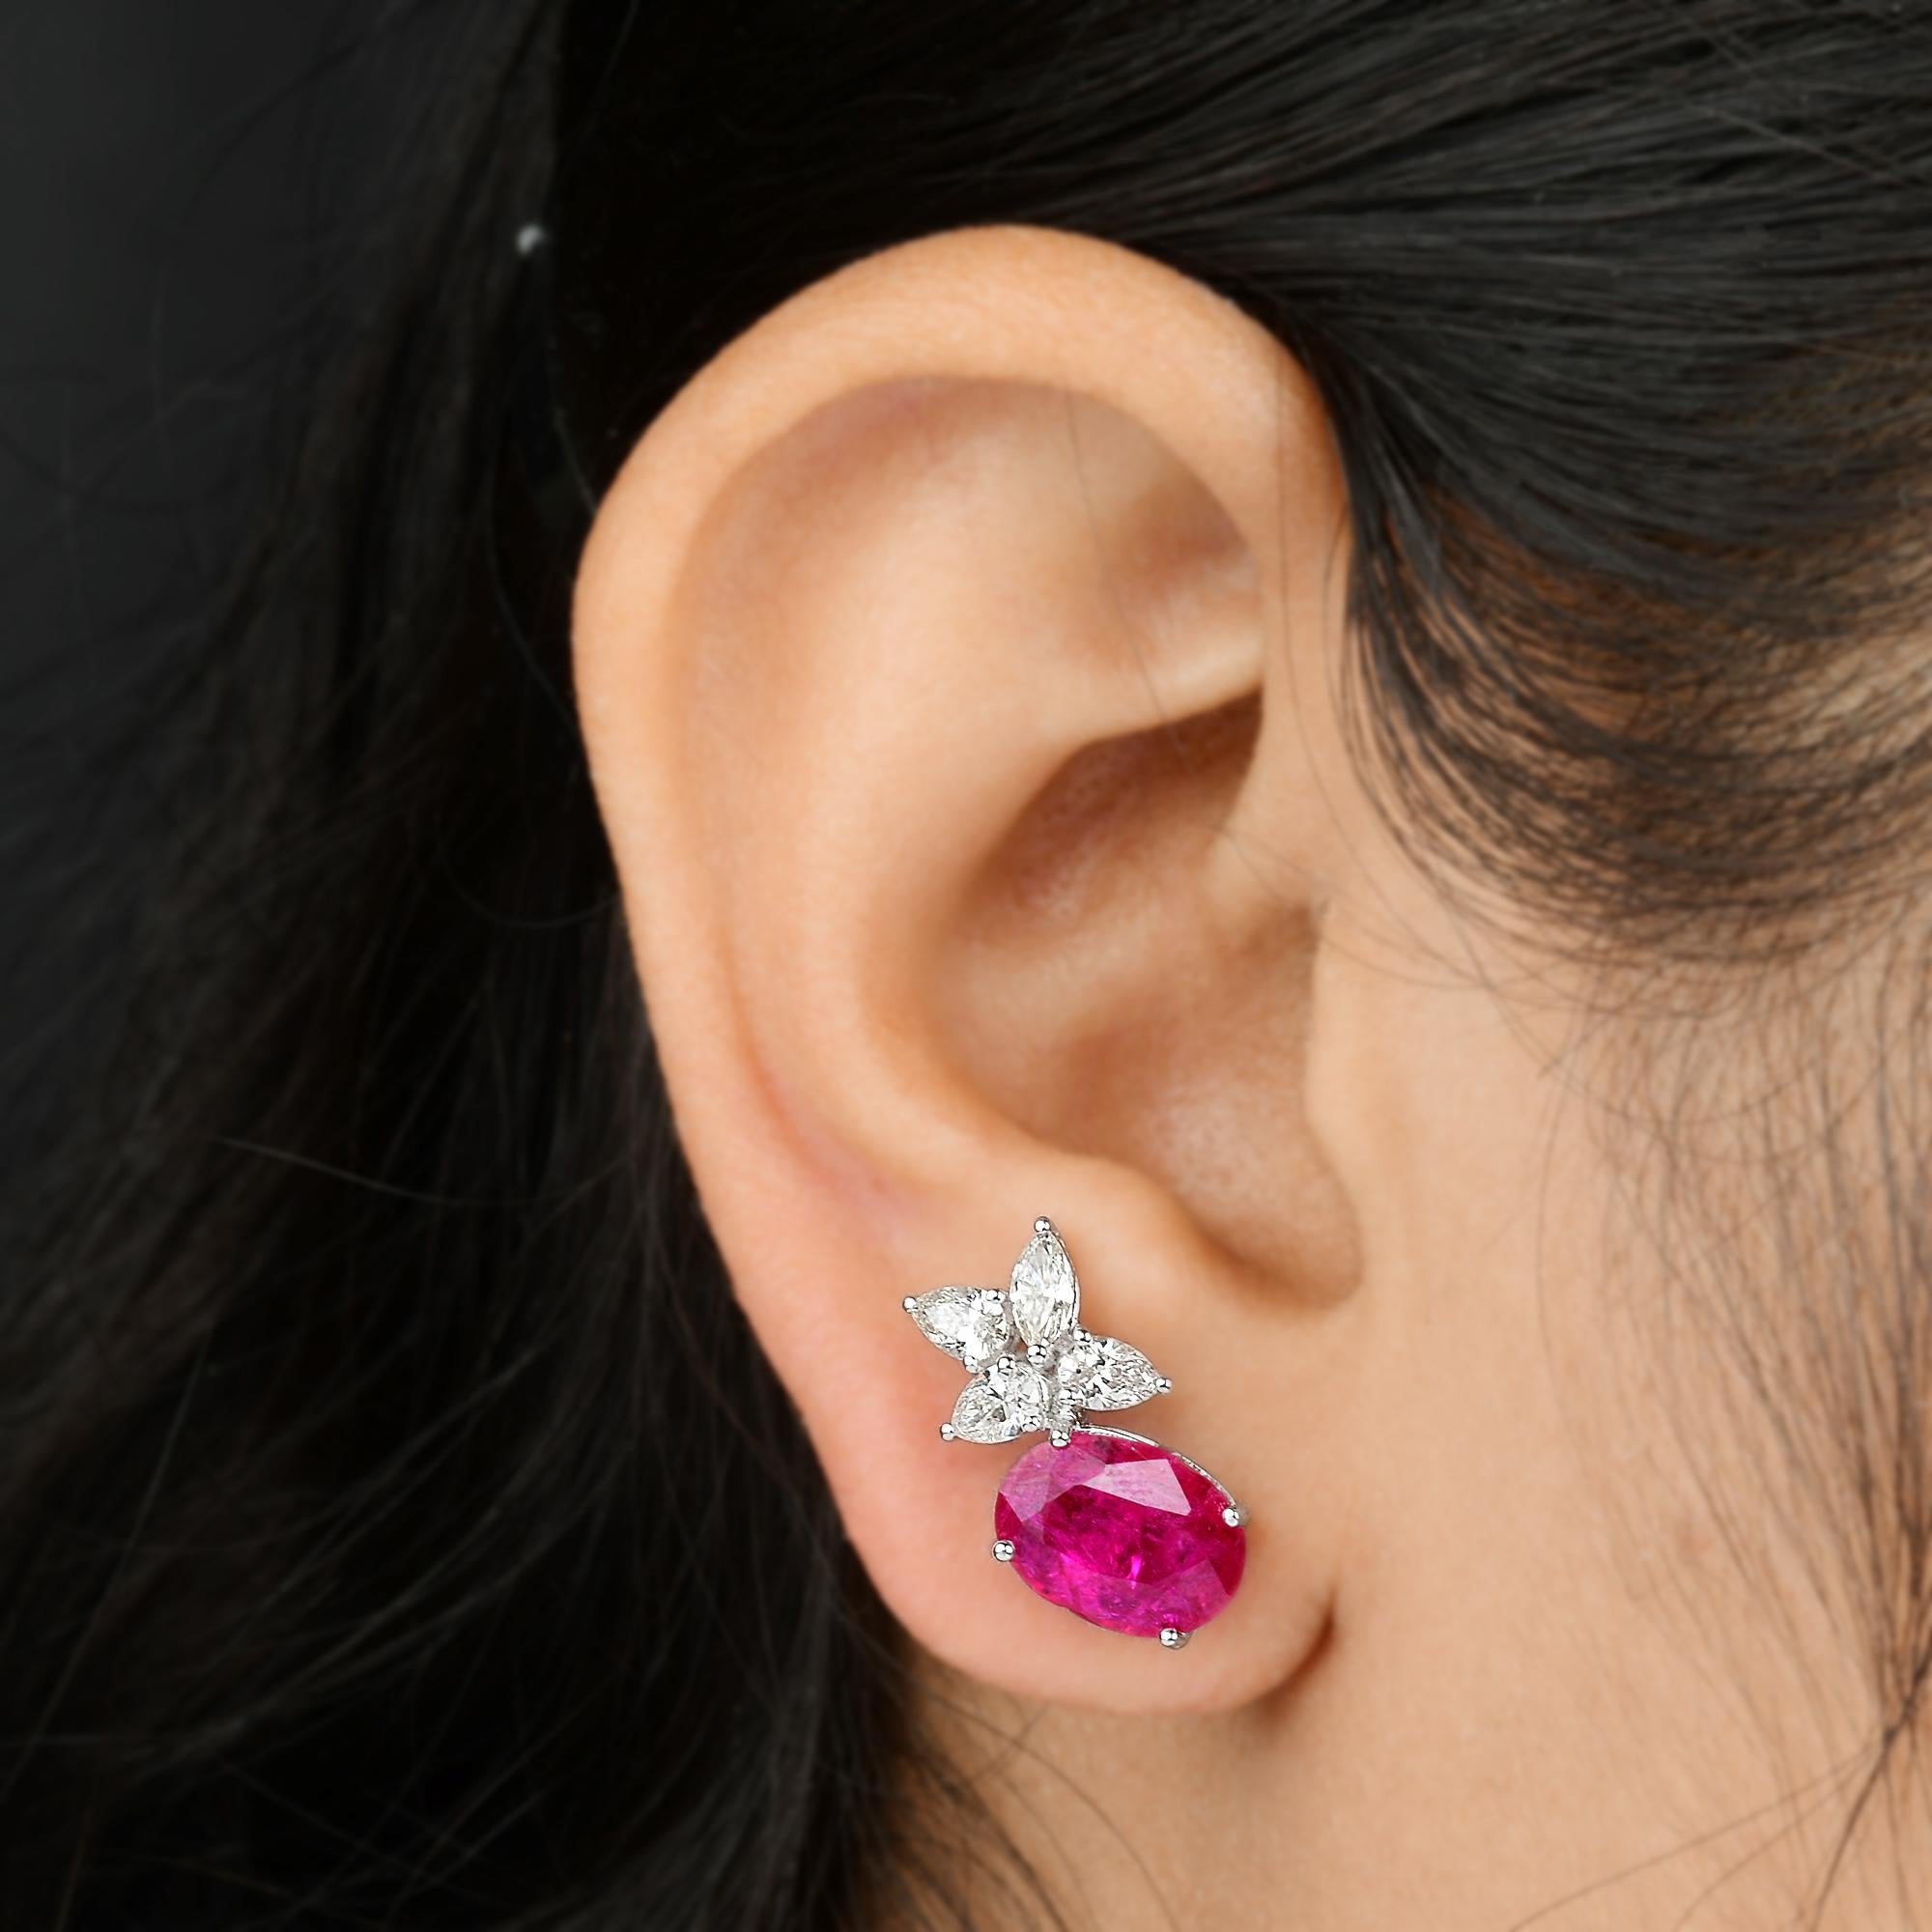 Oval Cut 14k White Gold Oval Shape Ruby Gemstone Stud Earrings Diamond Pave Fine Jewelry For Sale